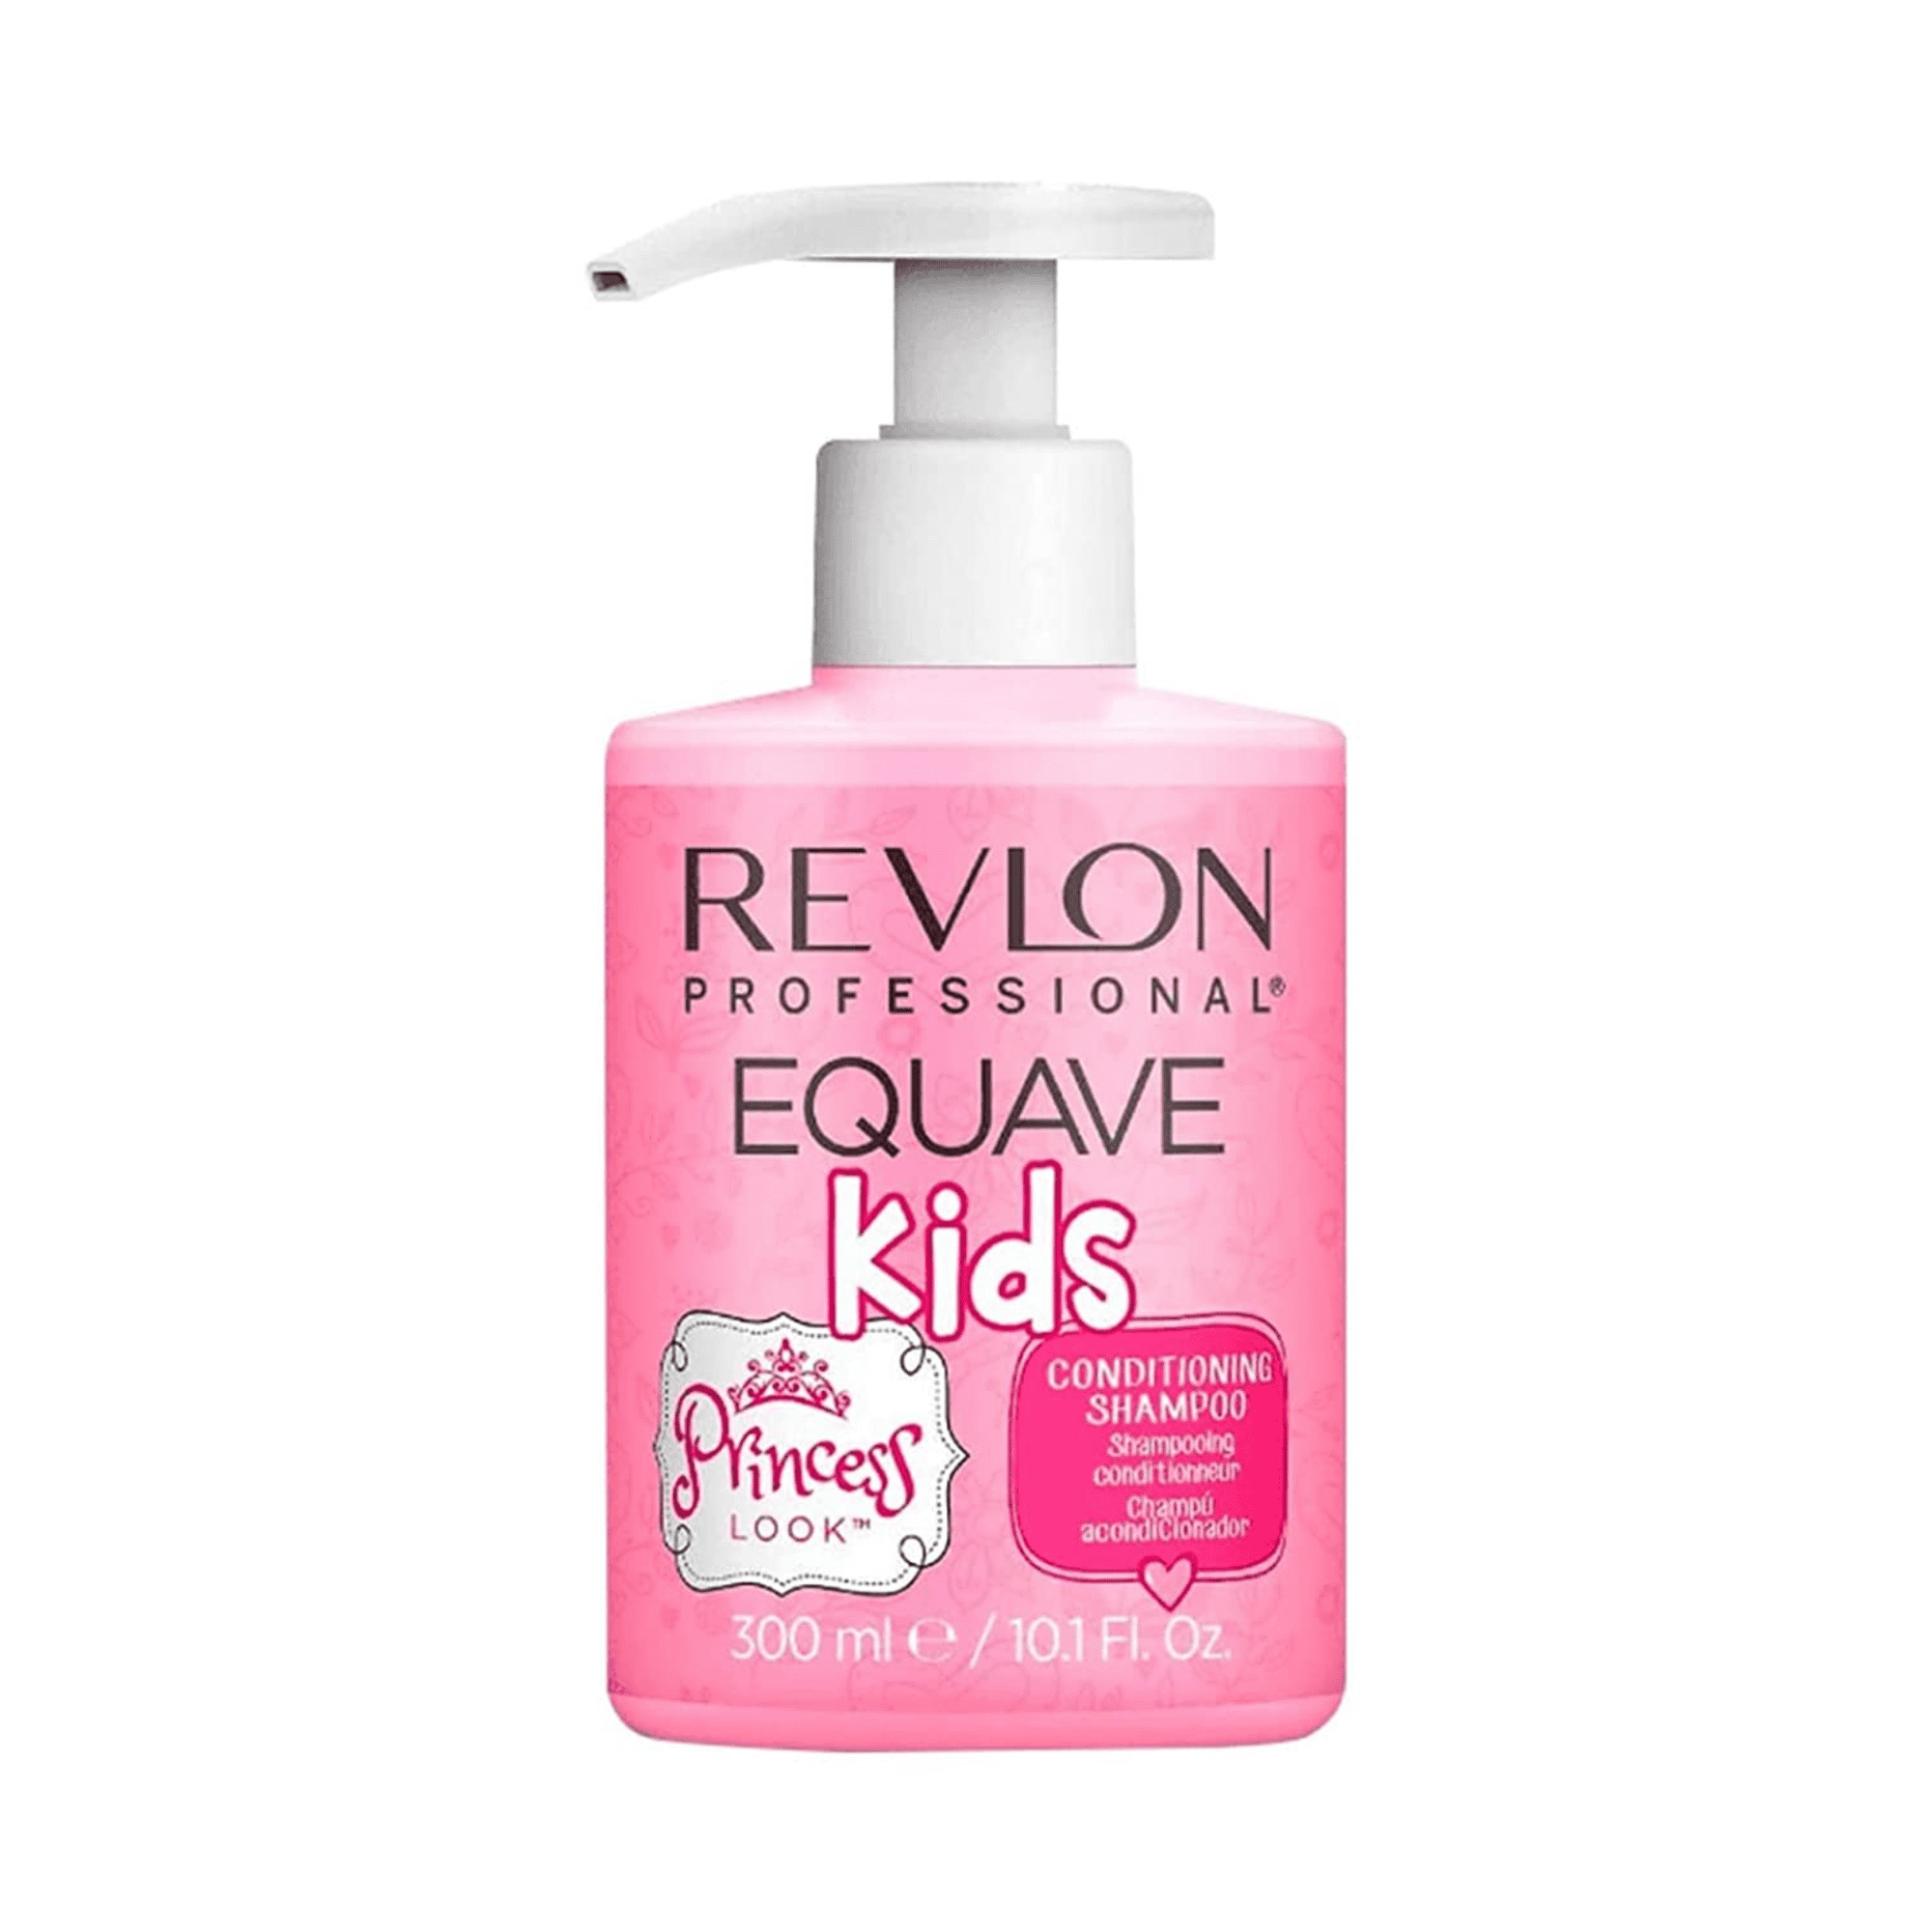 Revlon Equave Kids Conditioning Shampoo - Walmart.com